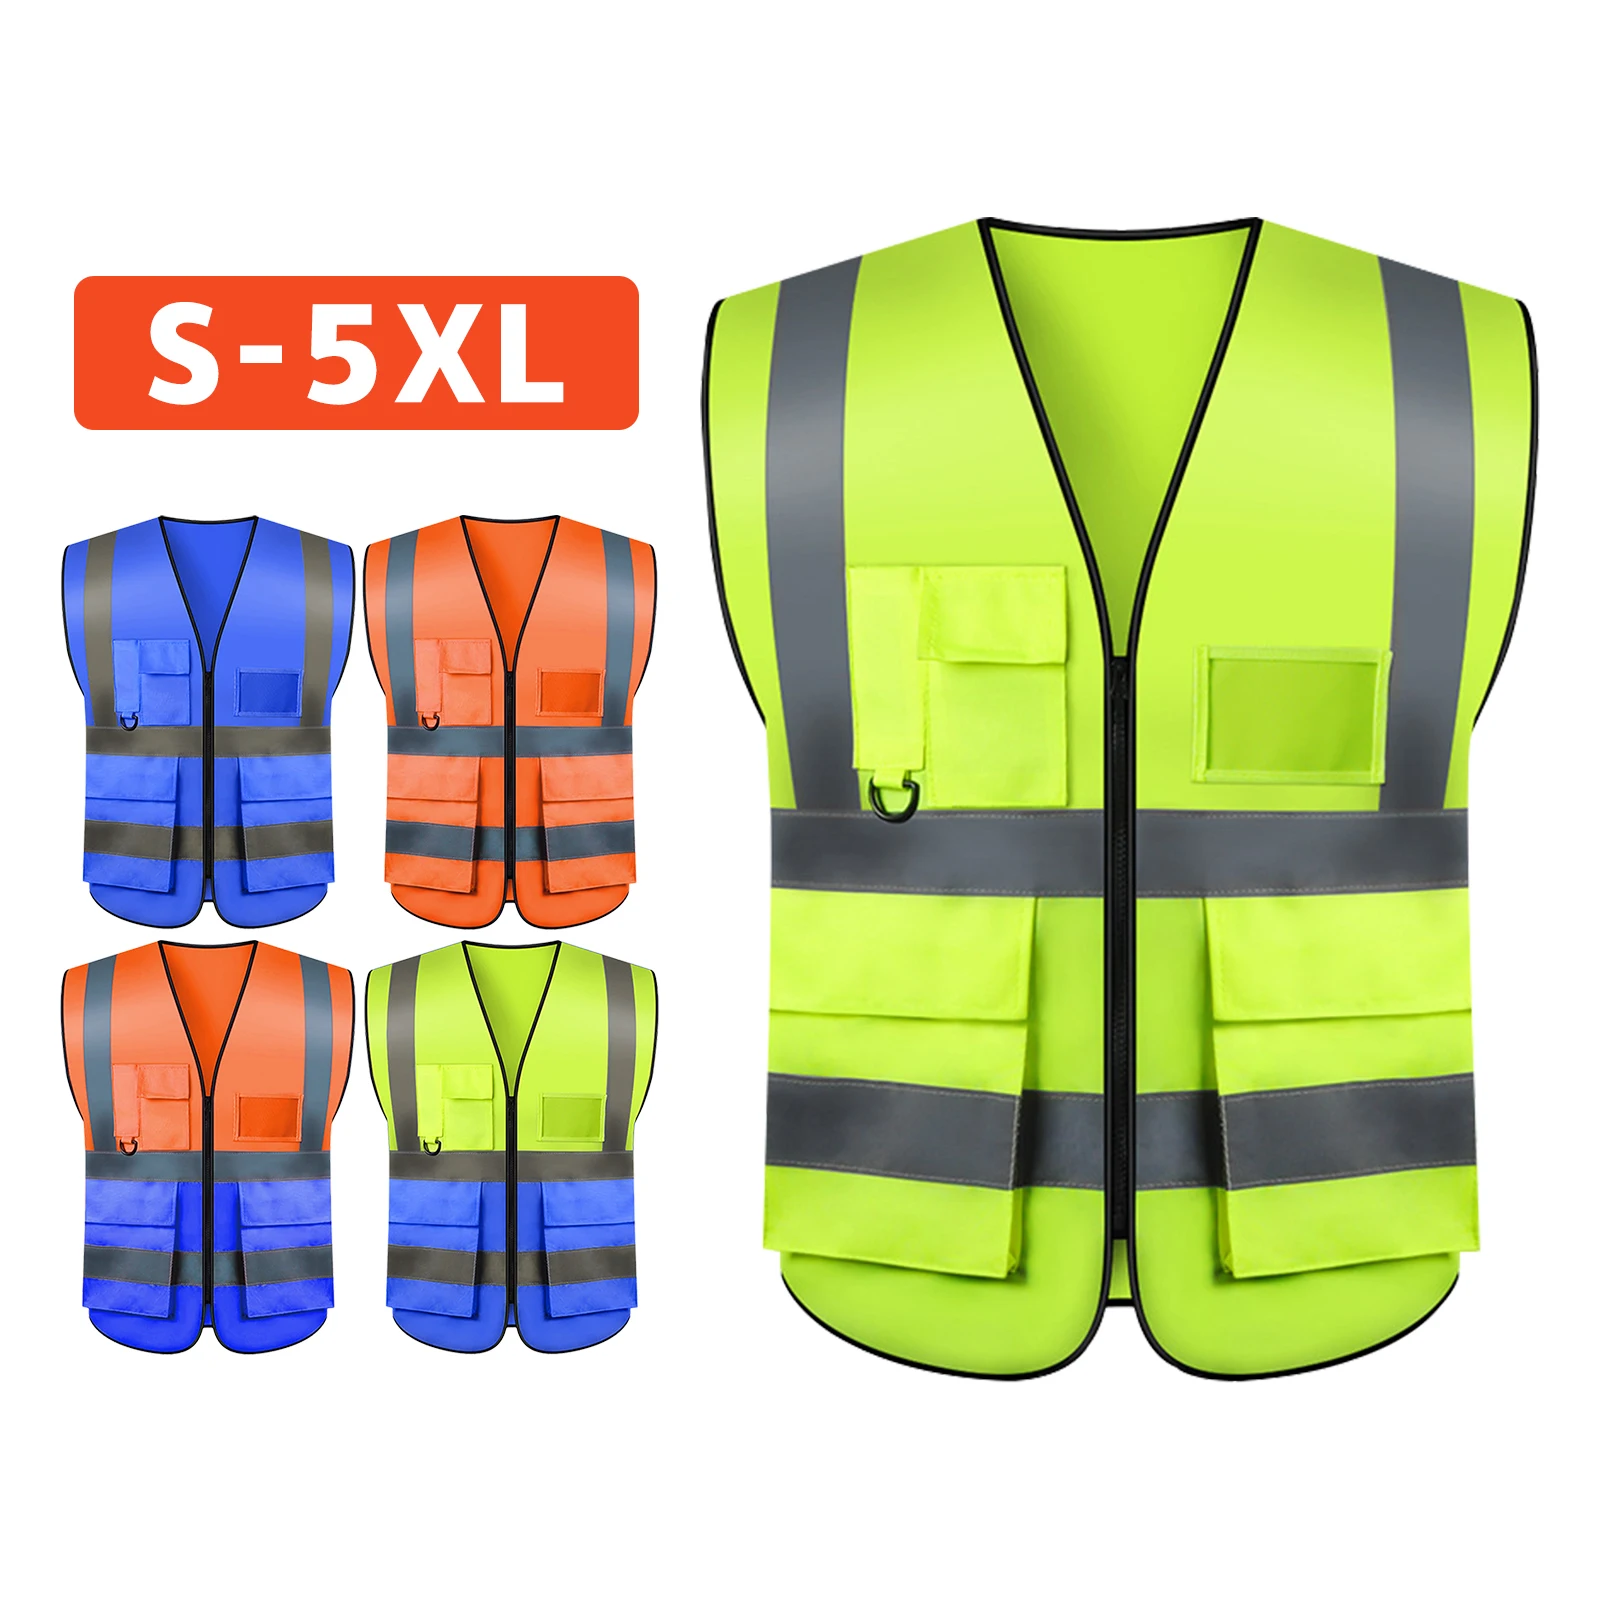 

Safety Vest, High Visibility Reflective Vest with 5 Pockets Front for Men/Women, Meets ANSI/ISEA Standards